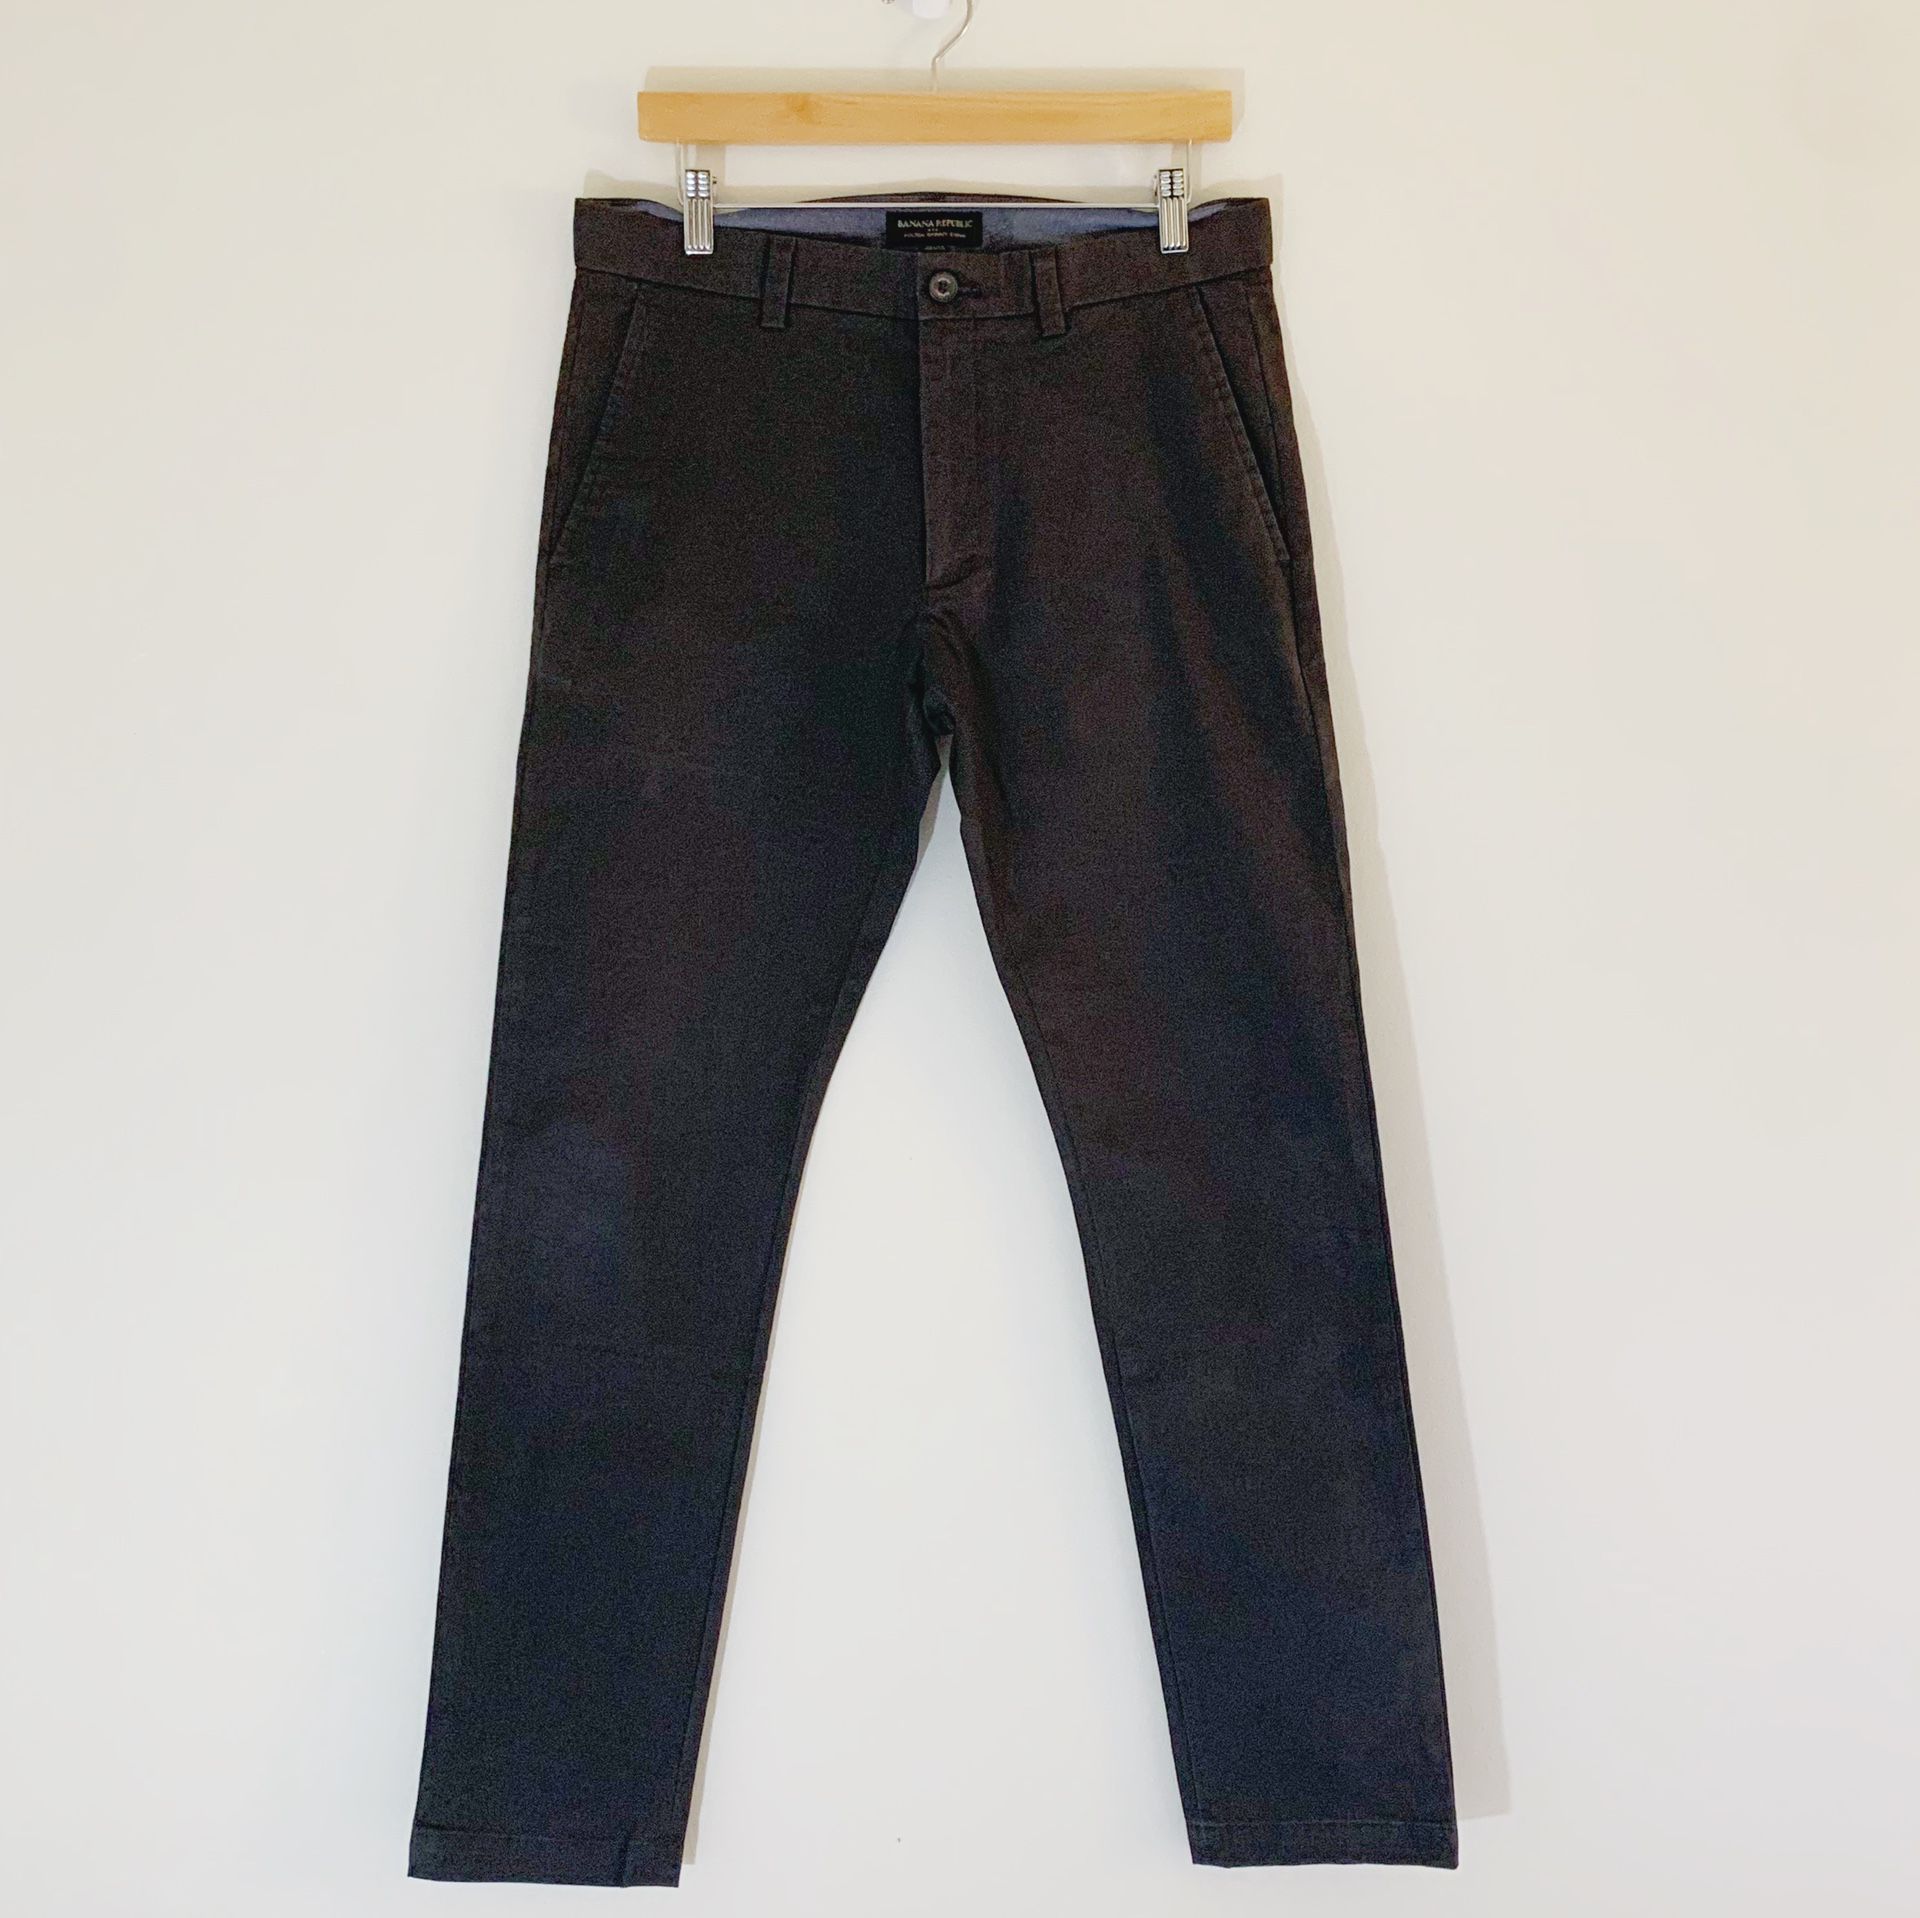 Men’s Banana Republic Gray “Fulton” Skinny Chino Pants Size 31x32